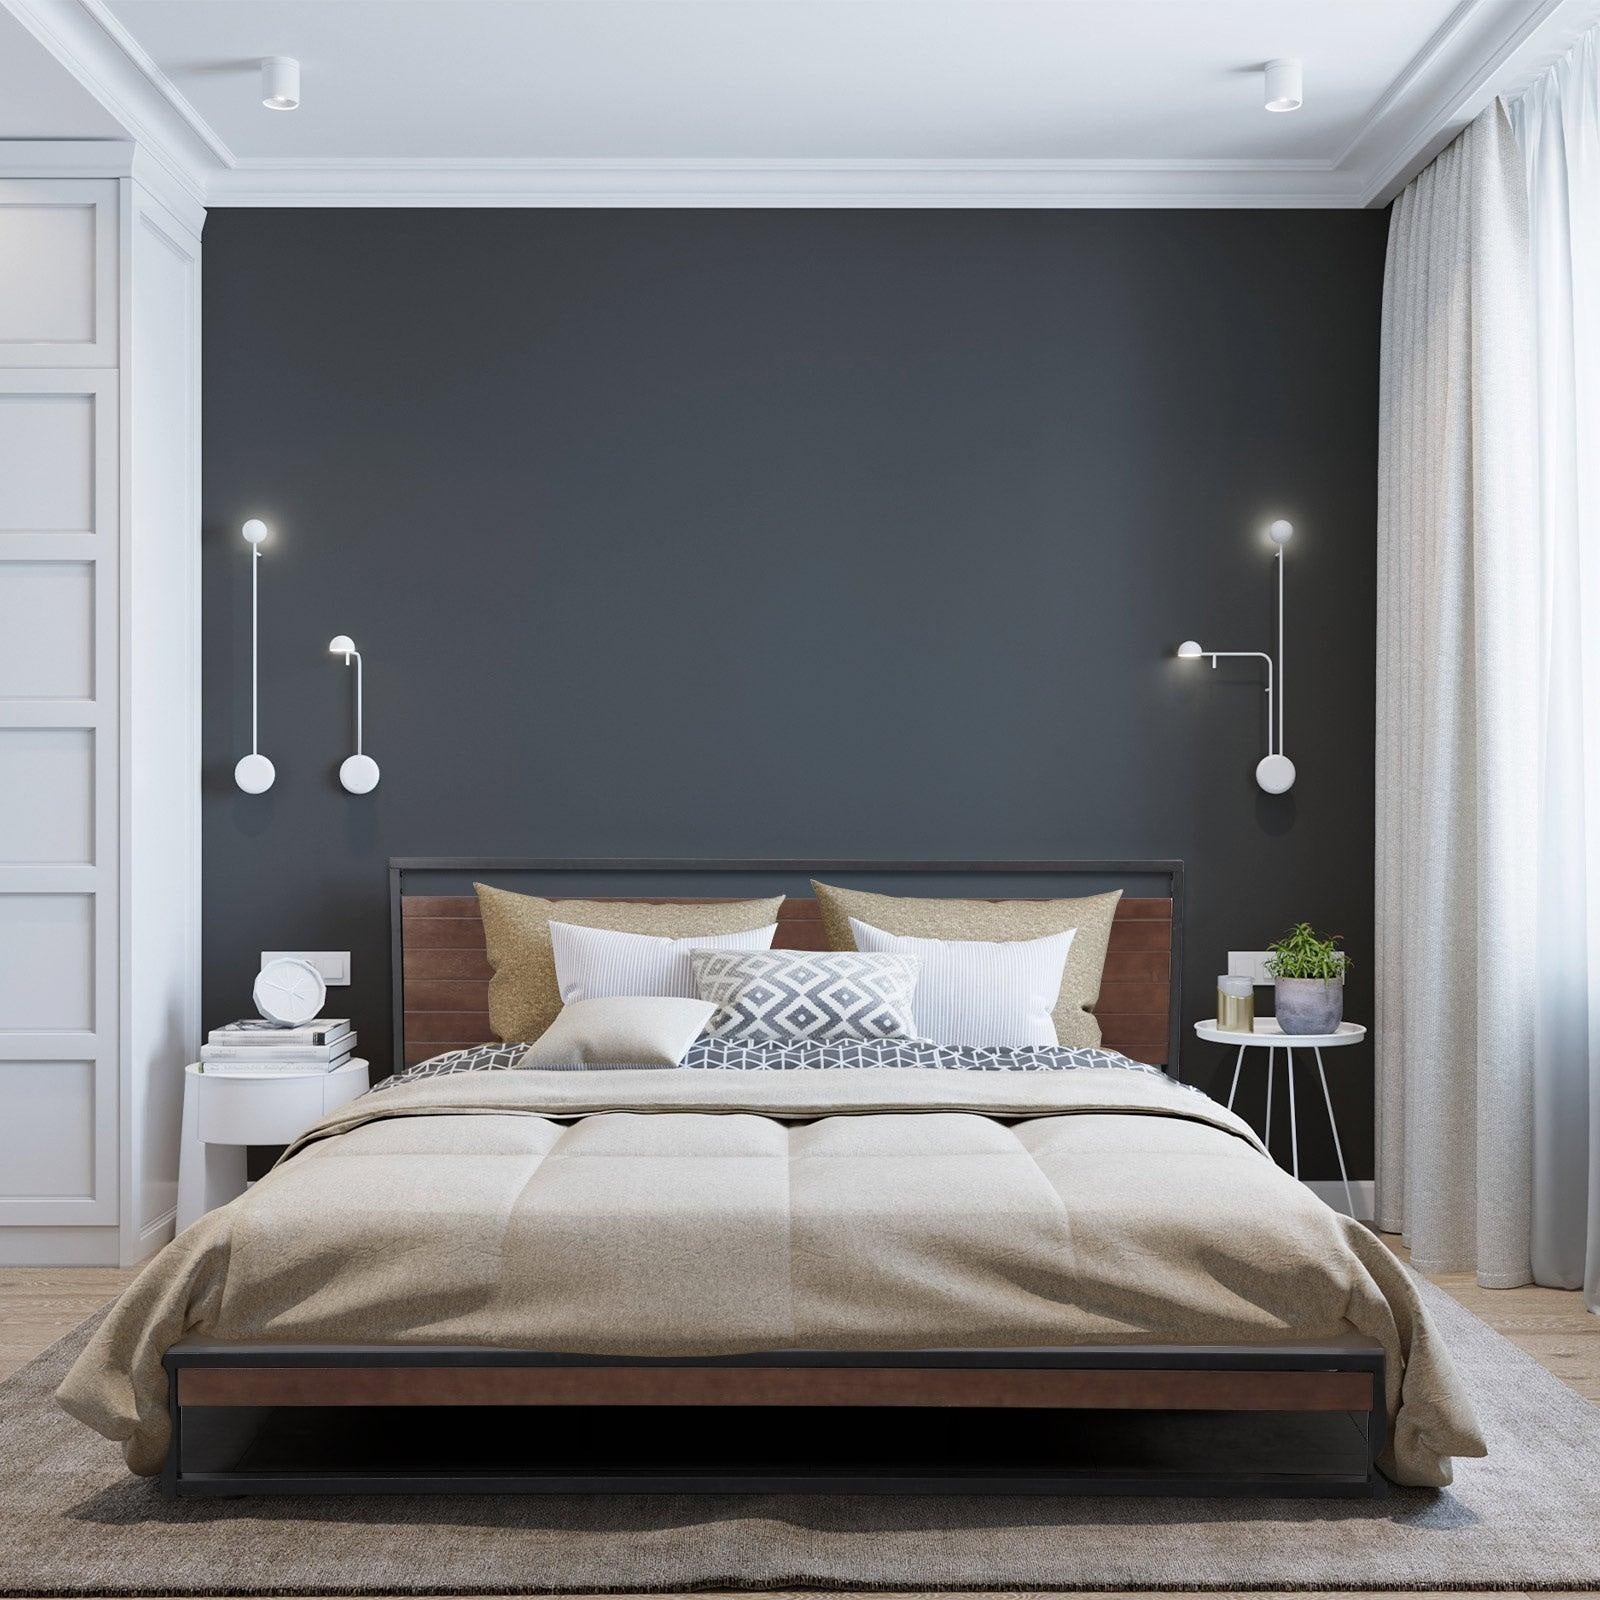 Milano Decor Azure Bed Frame With Headboard Black Wood Steel Platform King Deals499